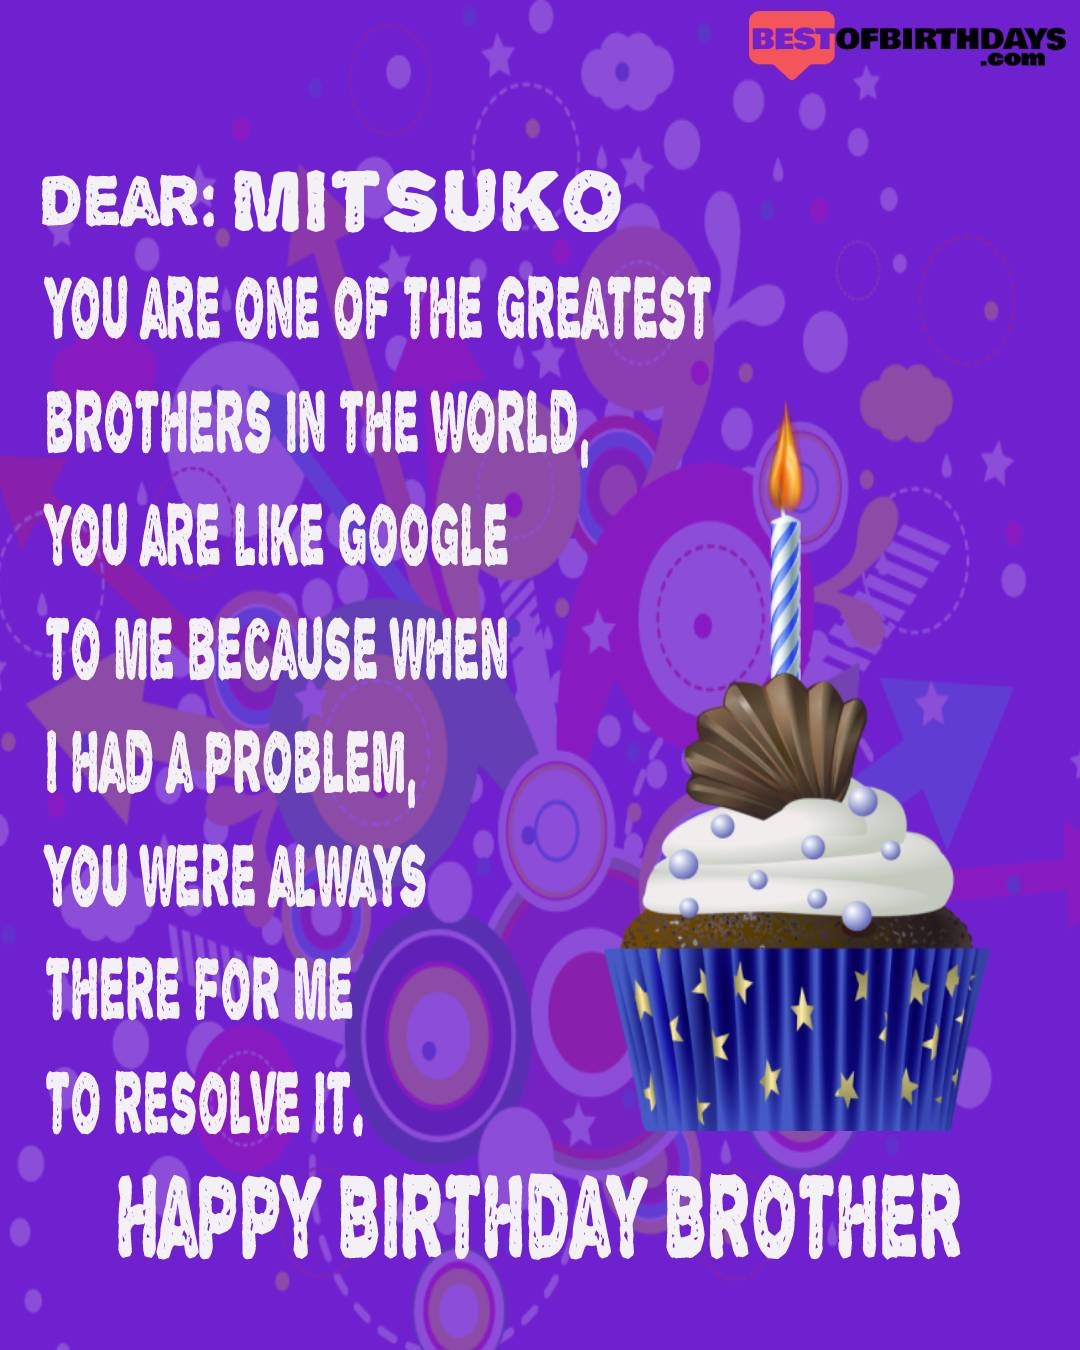 Happy birthday mitsuko bhai brother bro